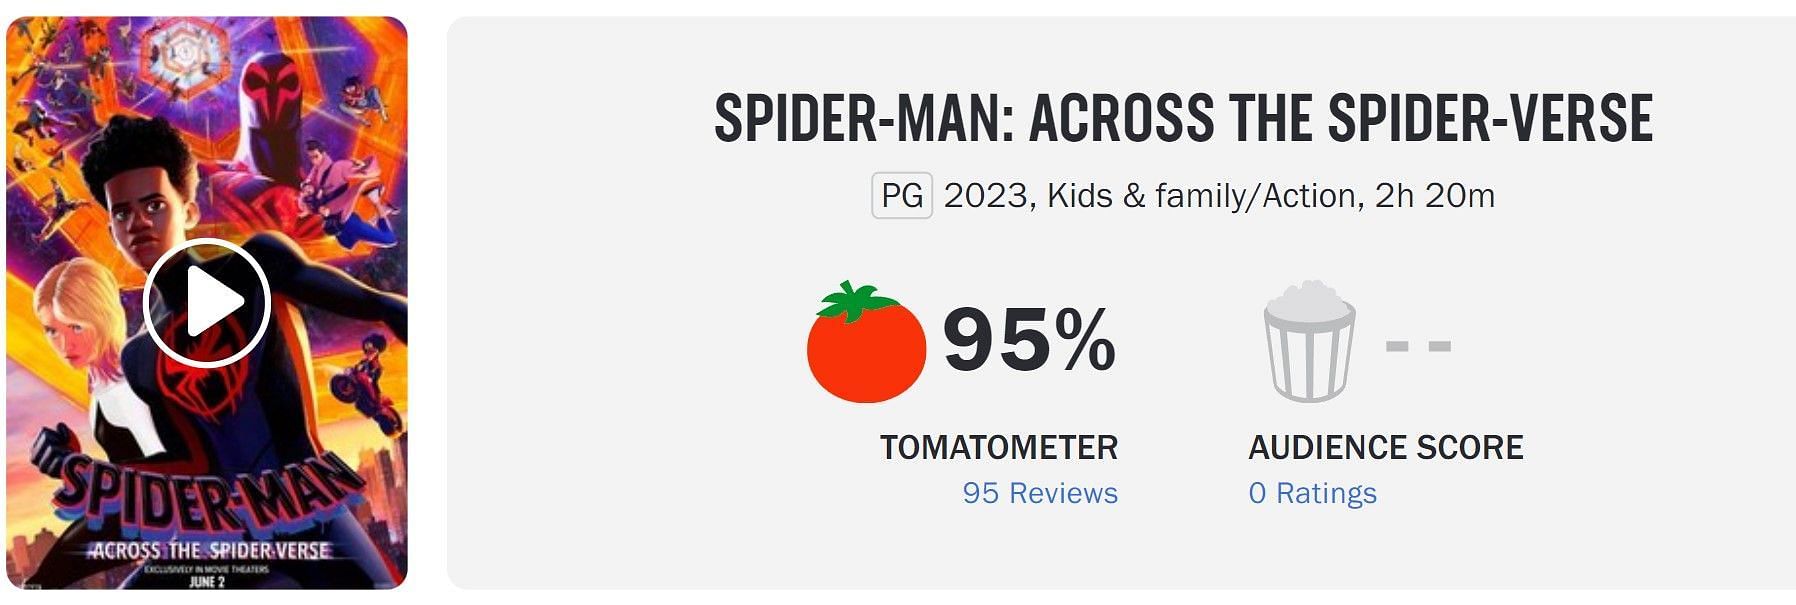 Spider-Verse 2 Rotten Tomatoes score (Image via Rotten Tomatoes)